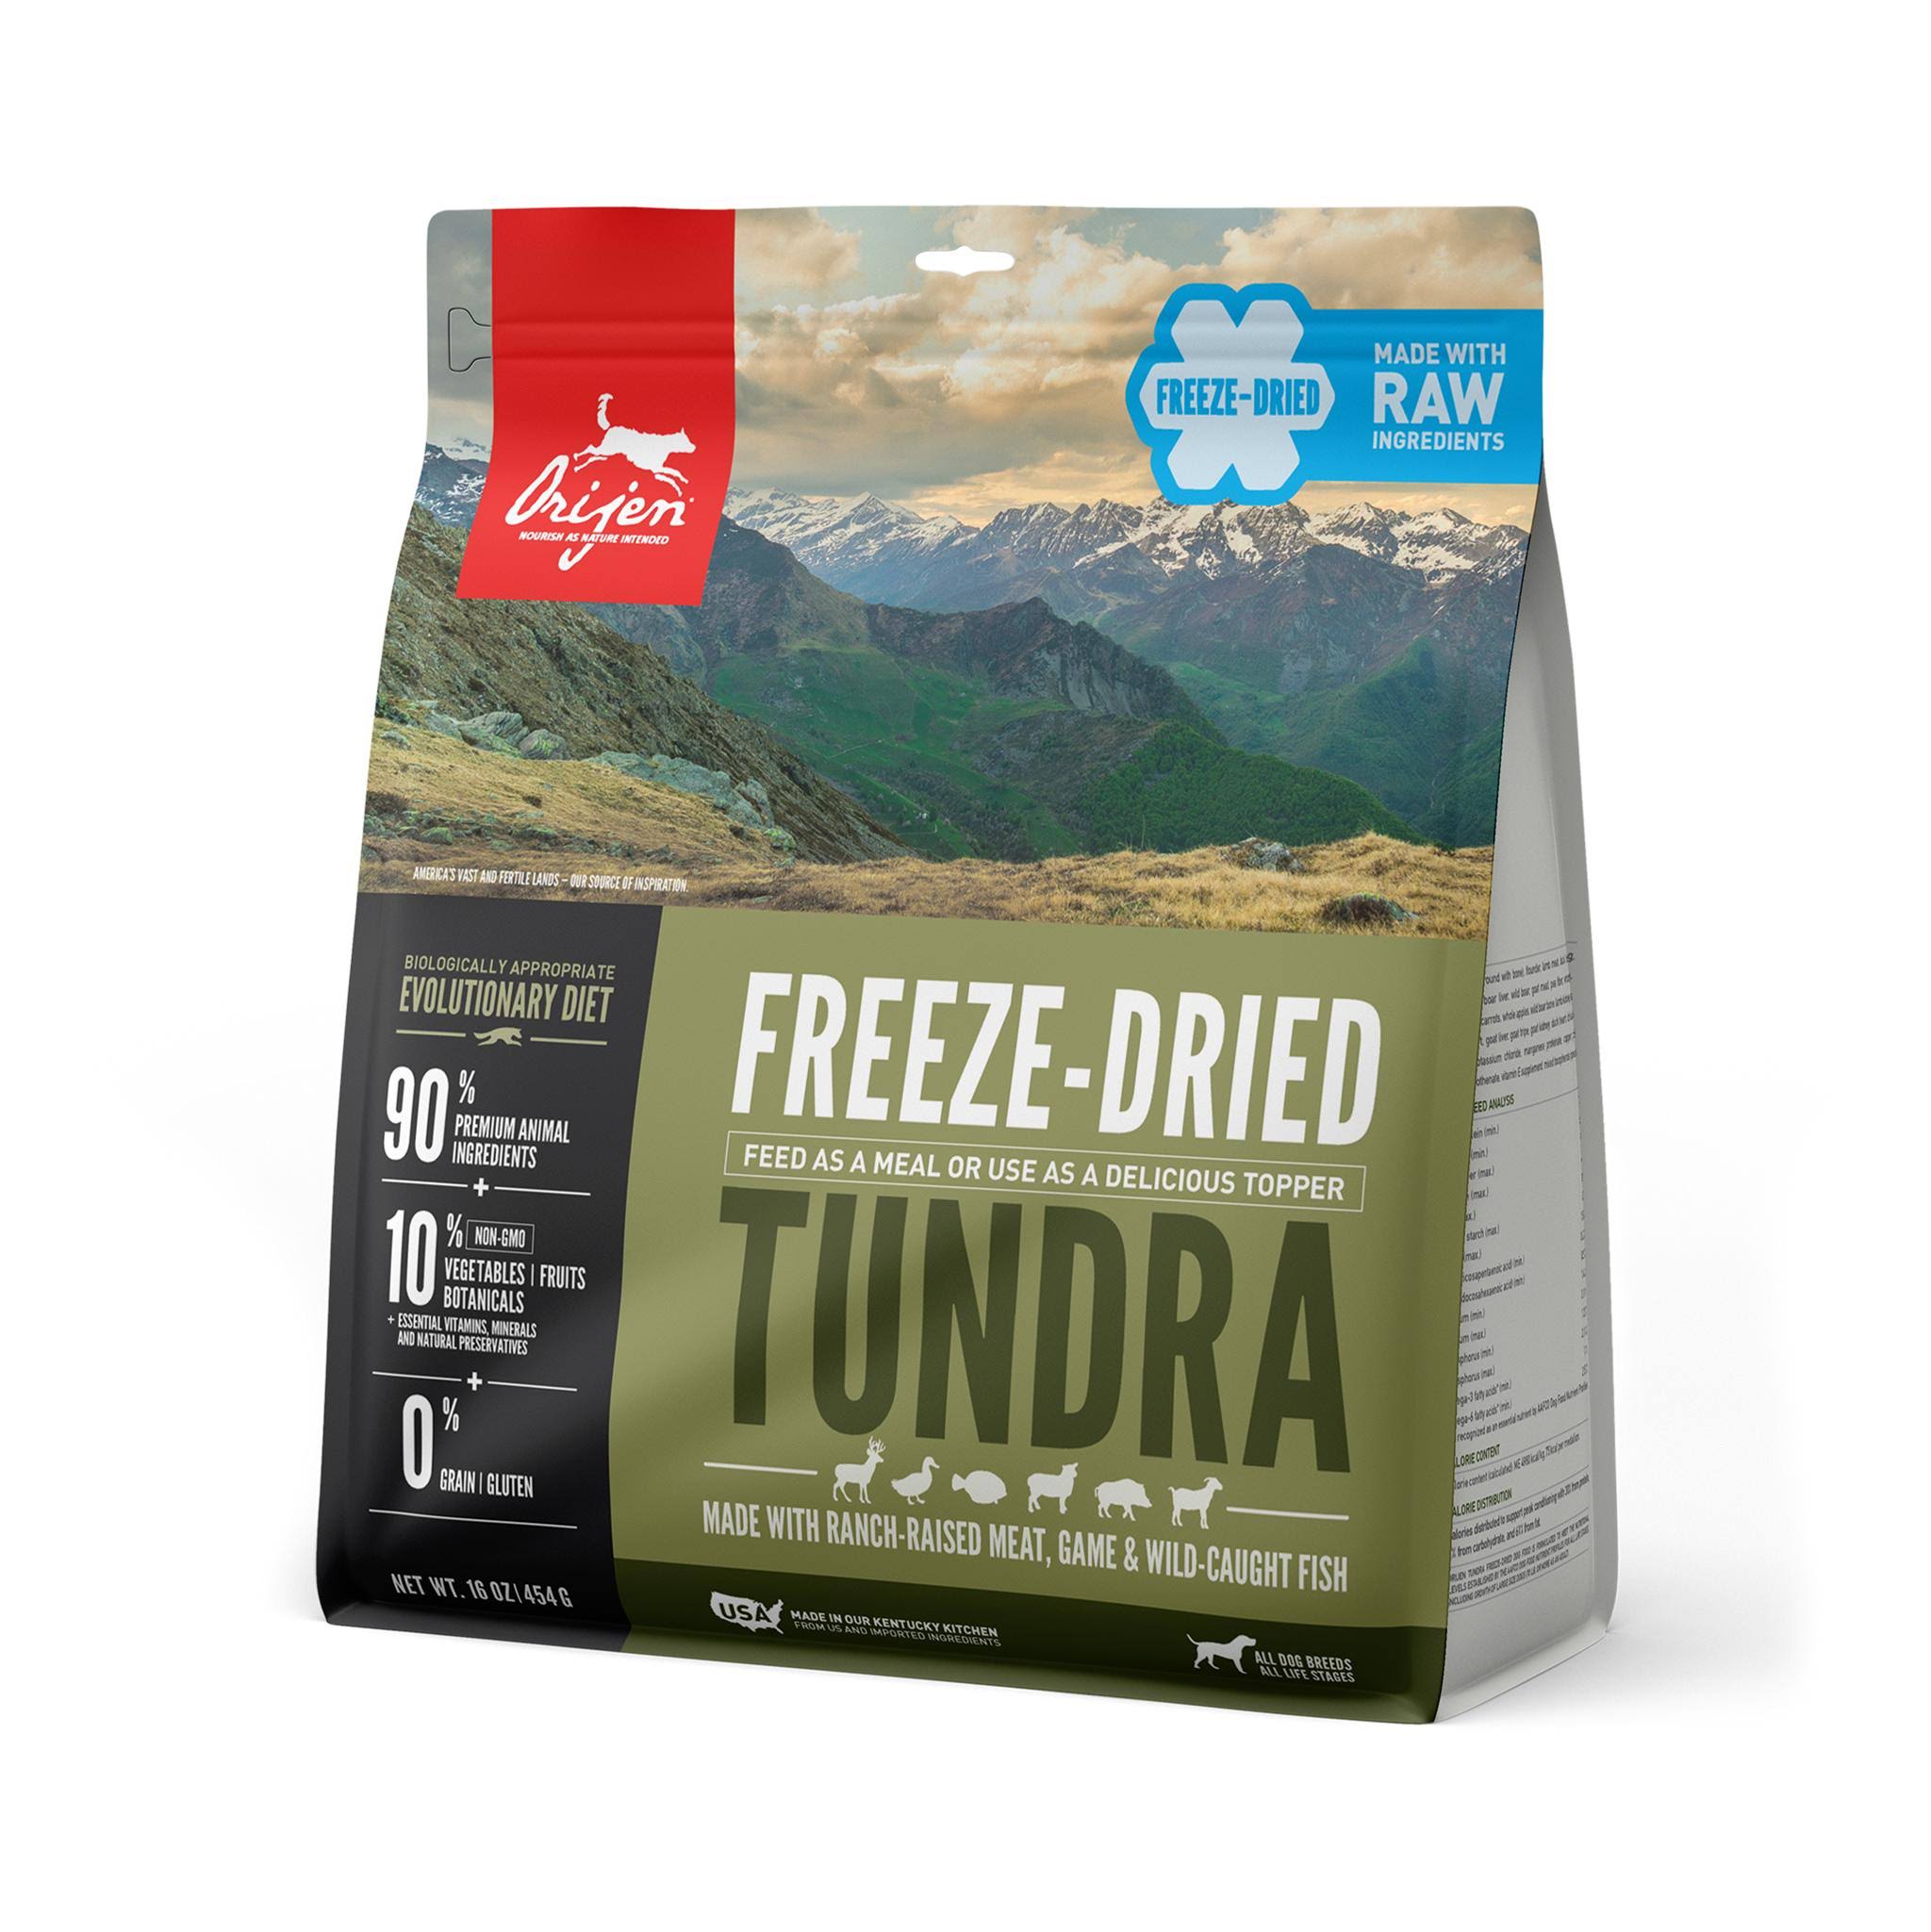 Orijen Freeze-Dried Tundra Dog Food - 16 oz